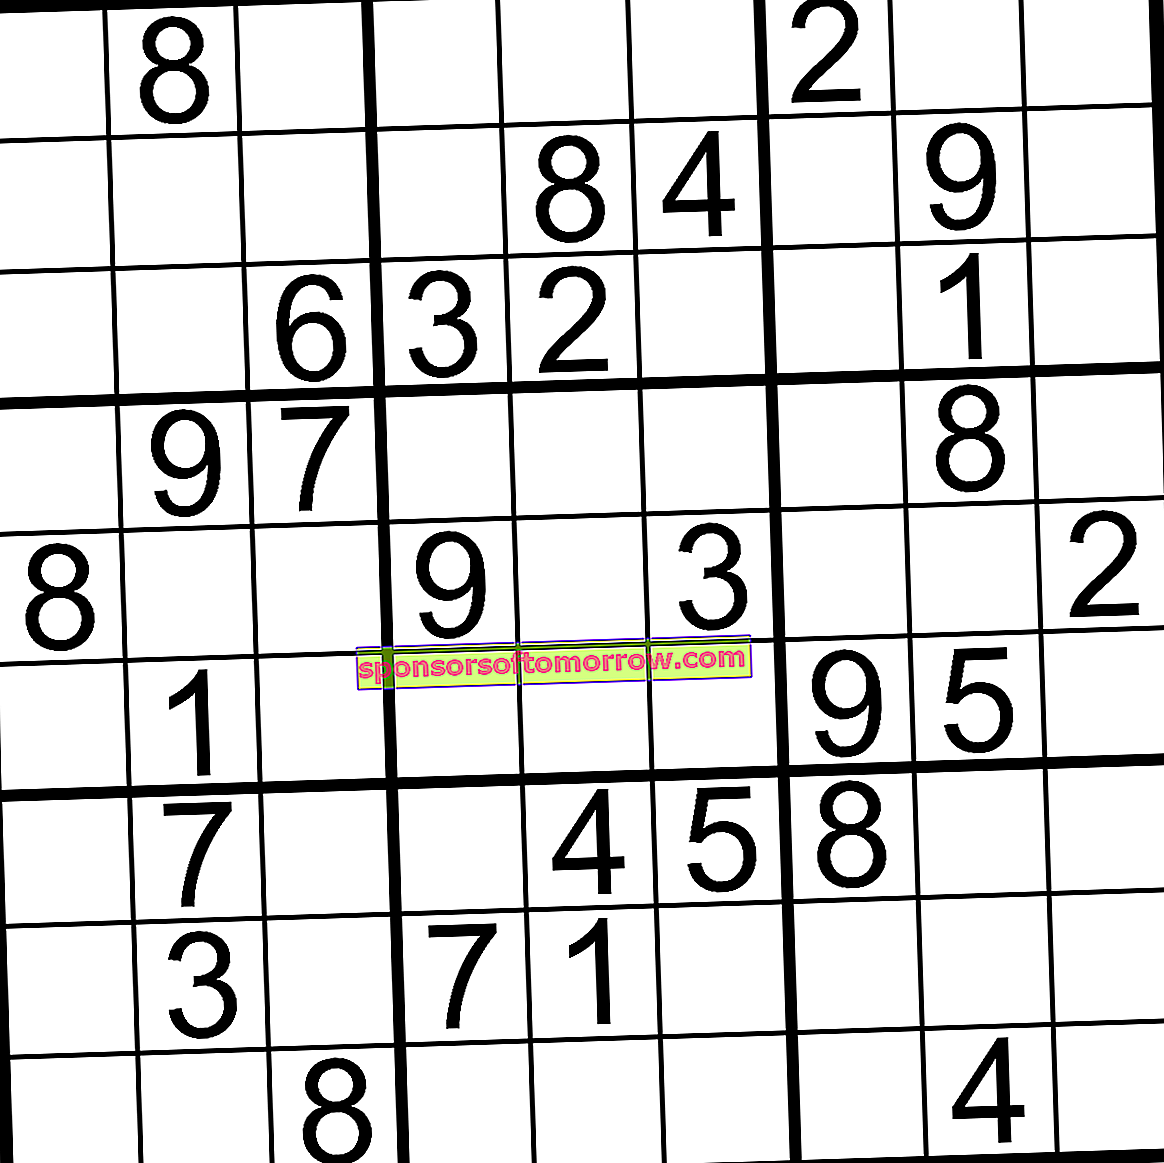 easy sudoku